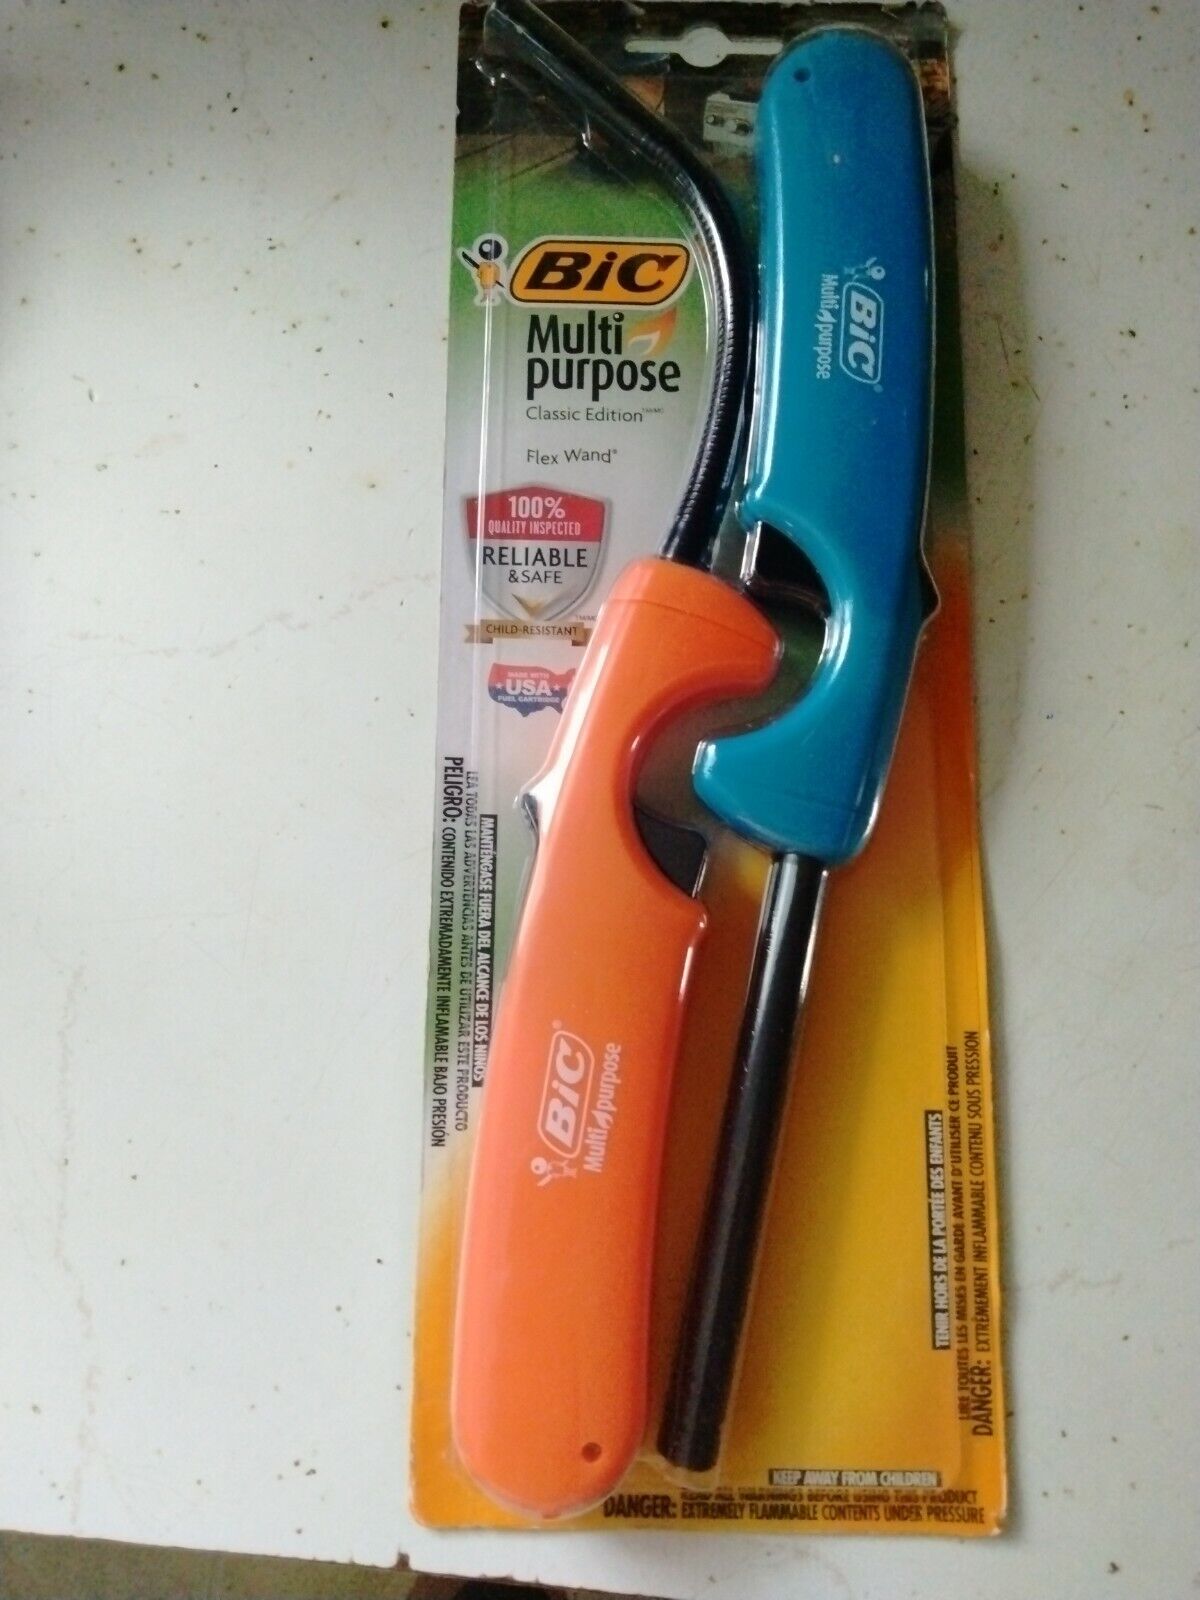 BIC Classic & Flex Wand Lighter Combo